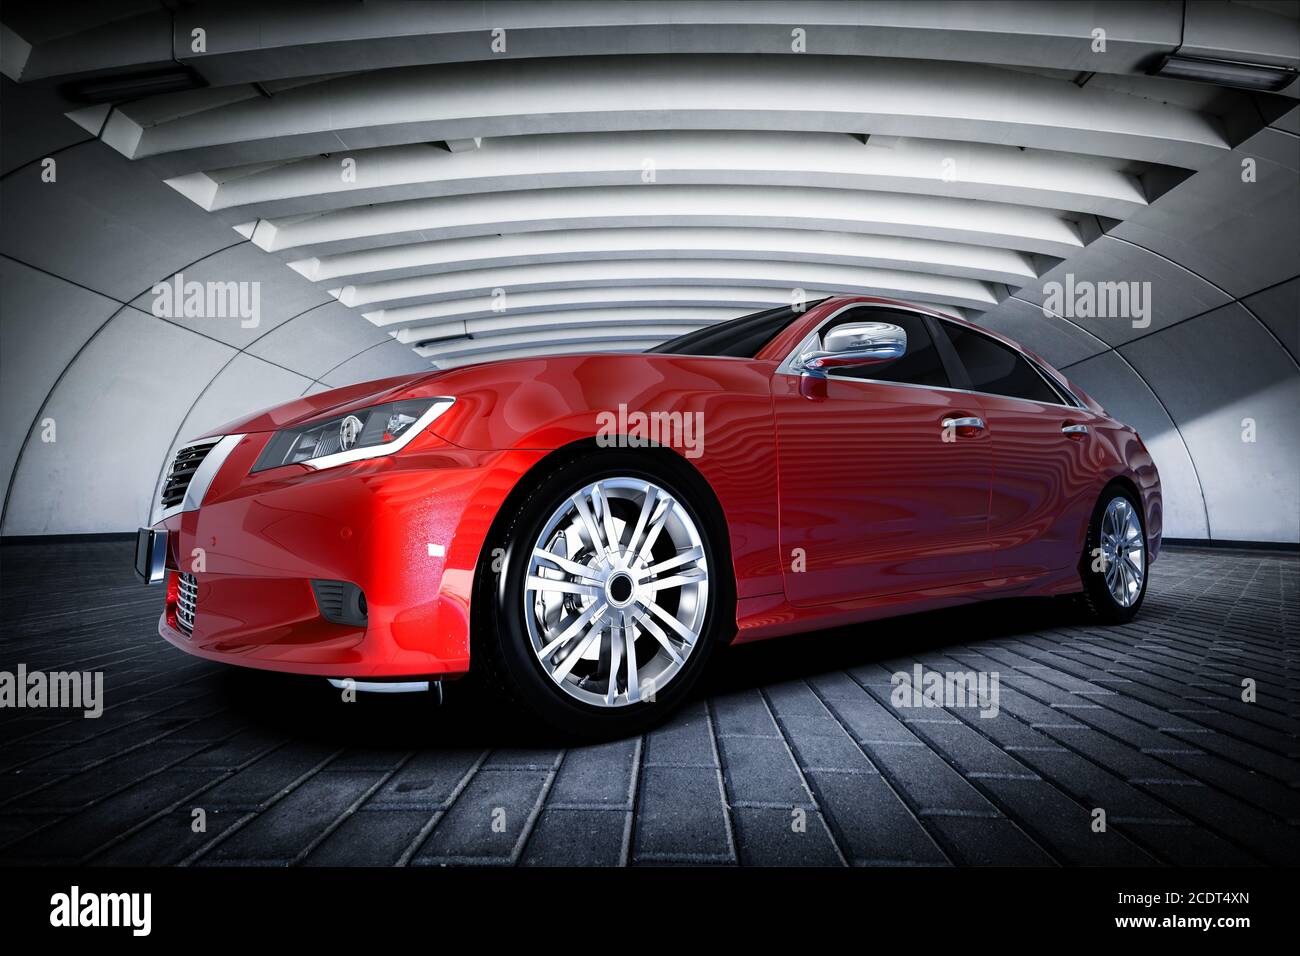 Modern red metallic sedan car in urban setting - tunnel. Generic design, brandless Stock Photo